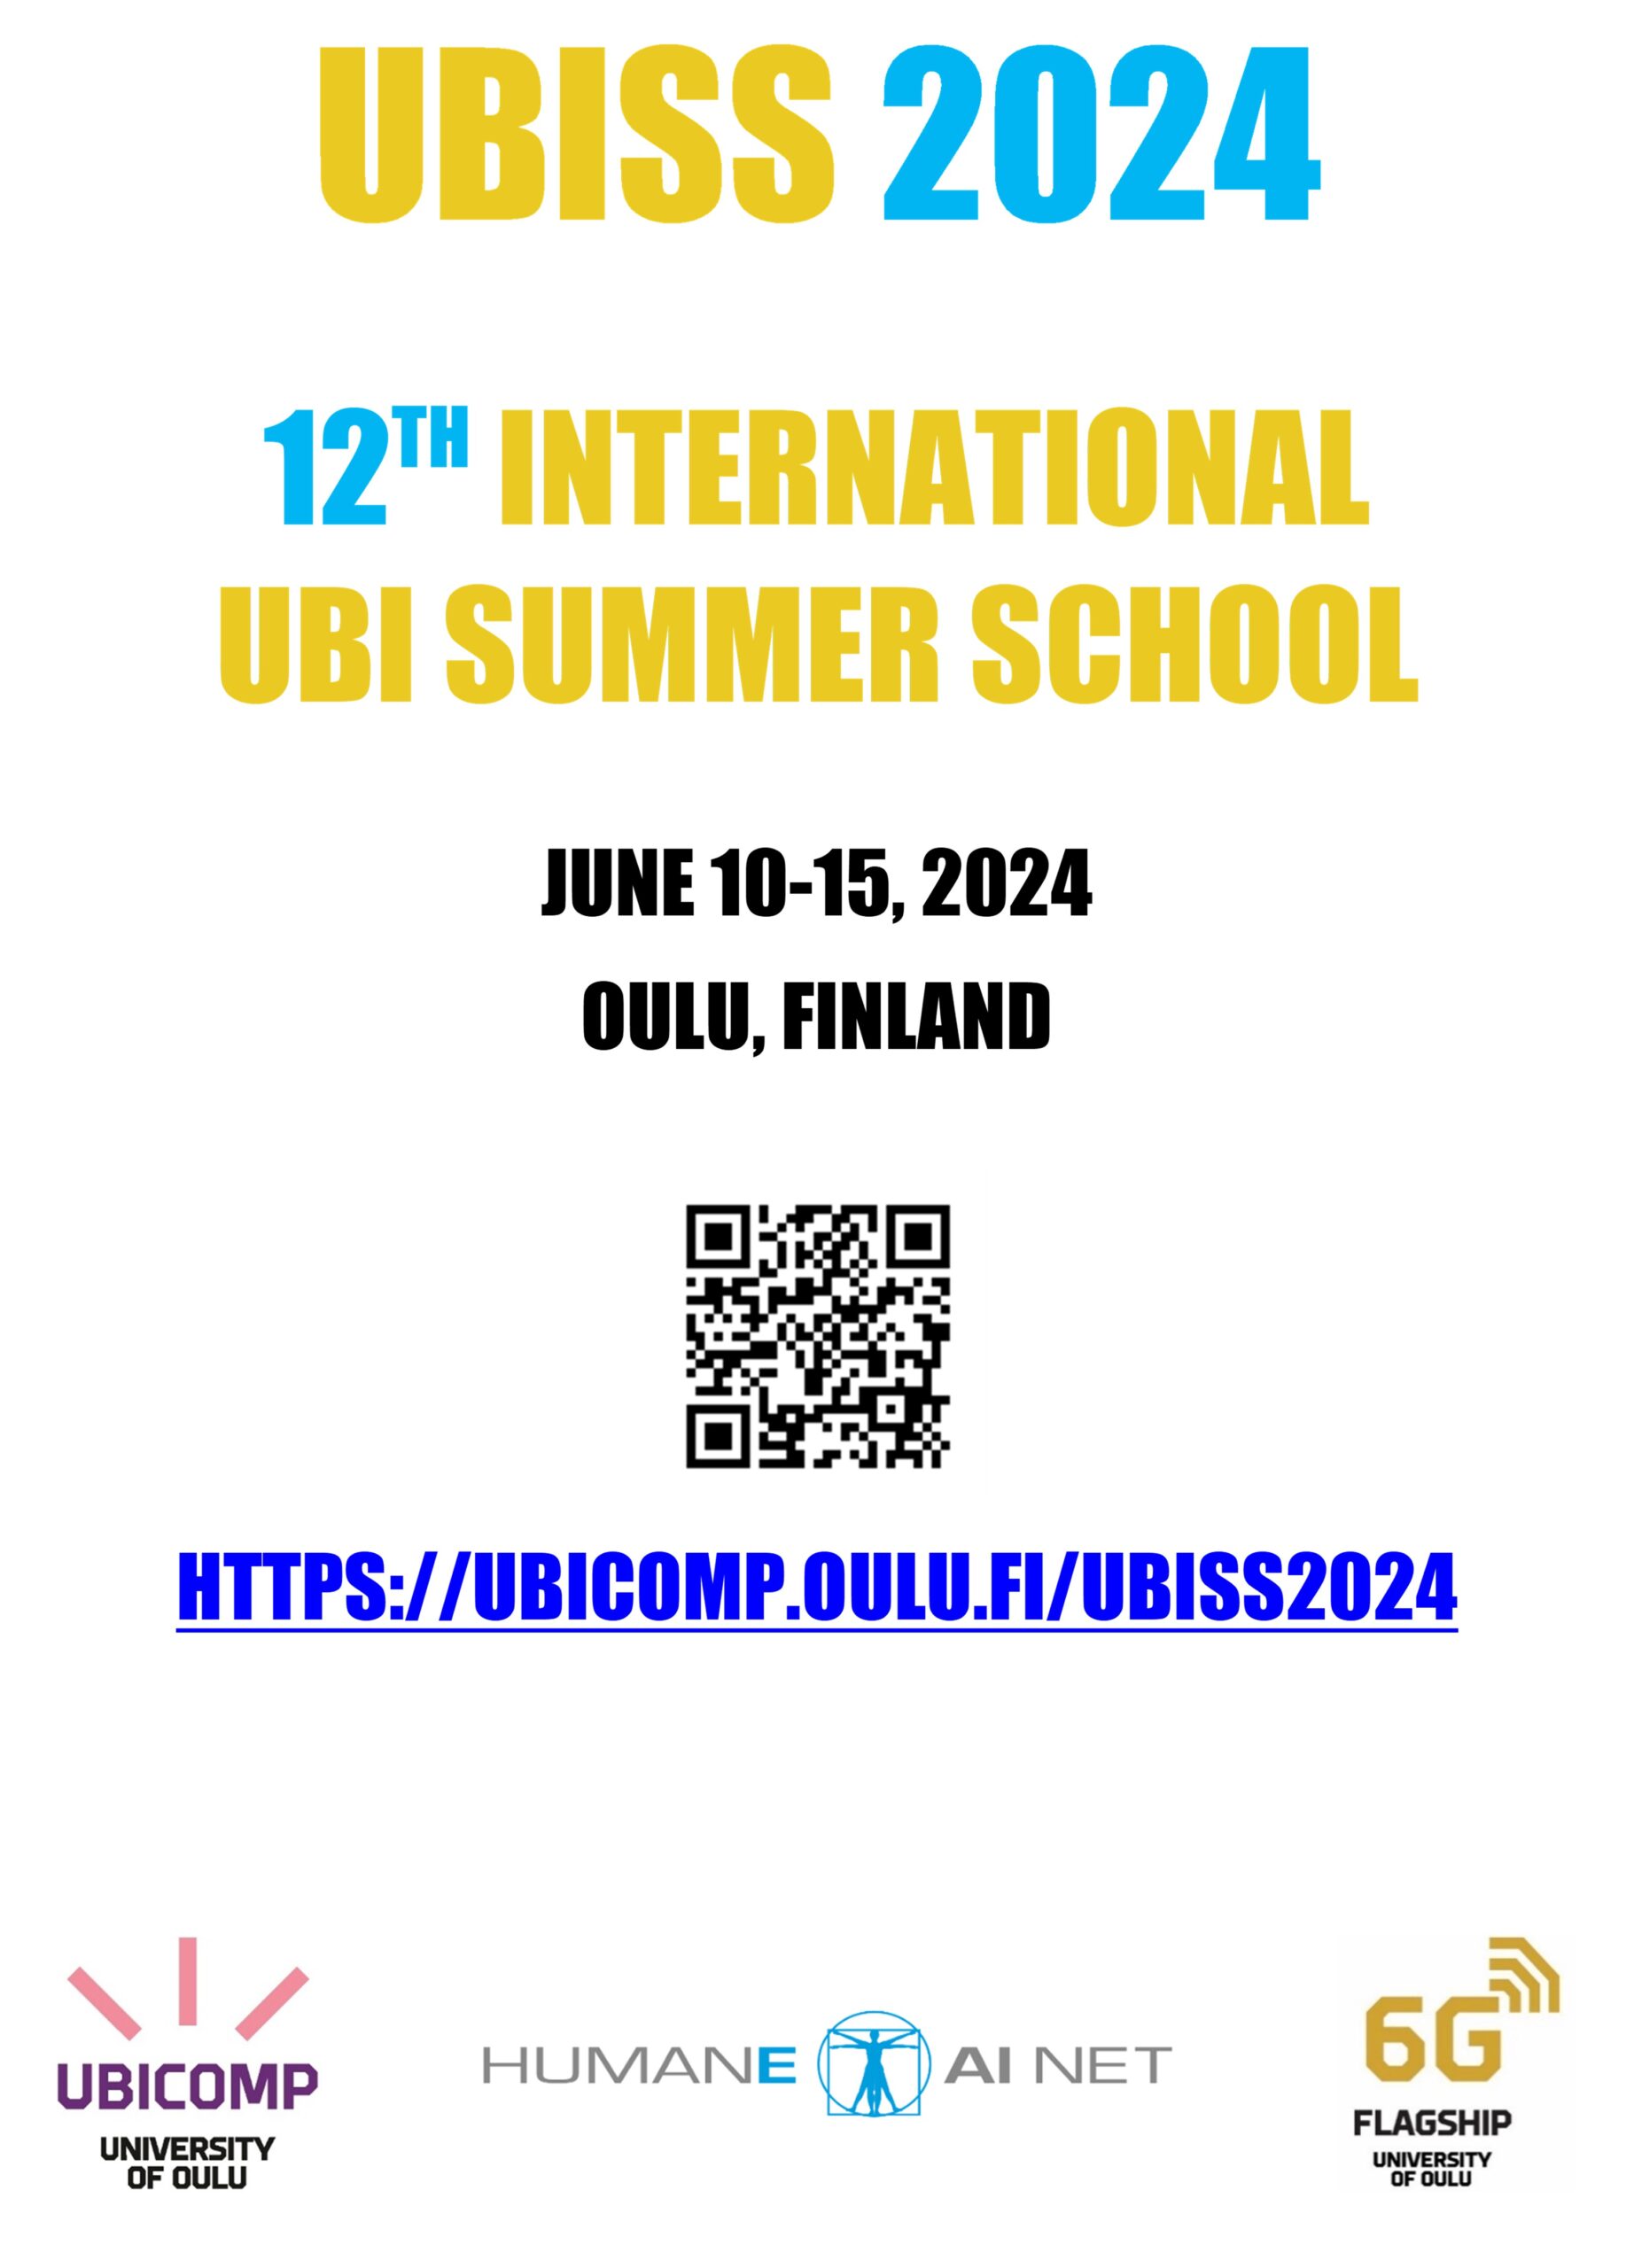 UBISS 2024 Program